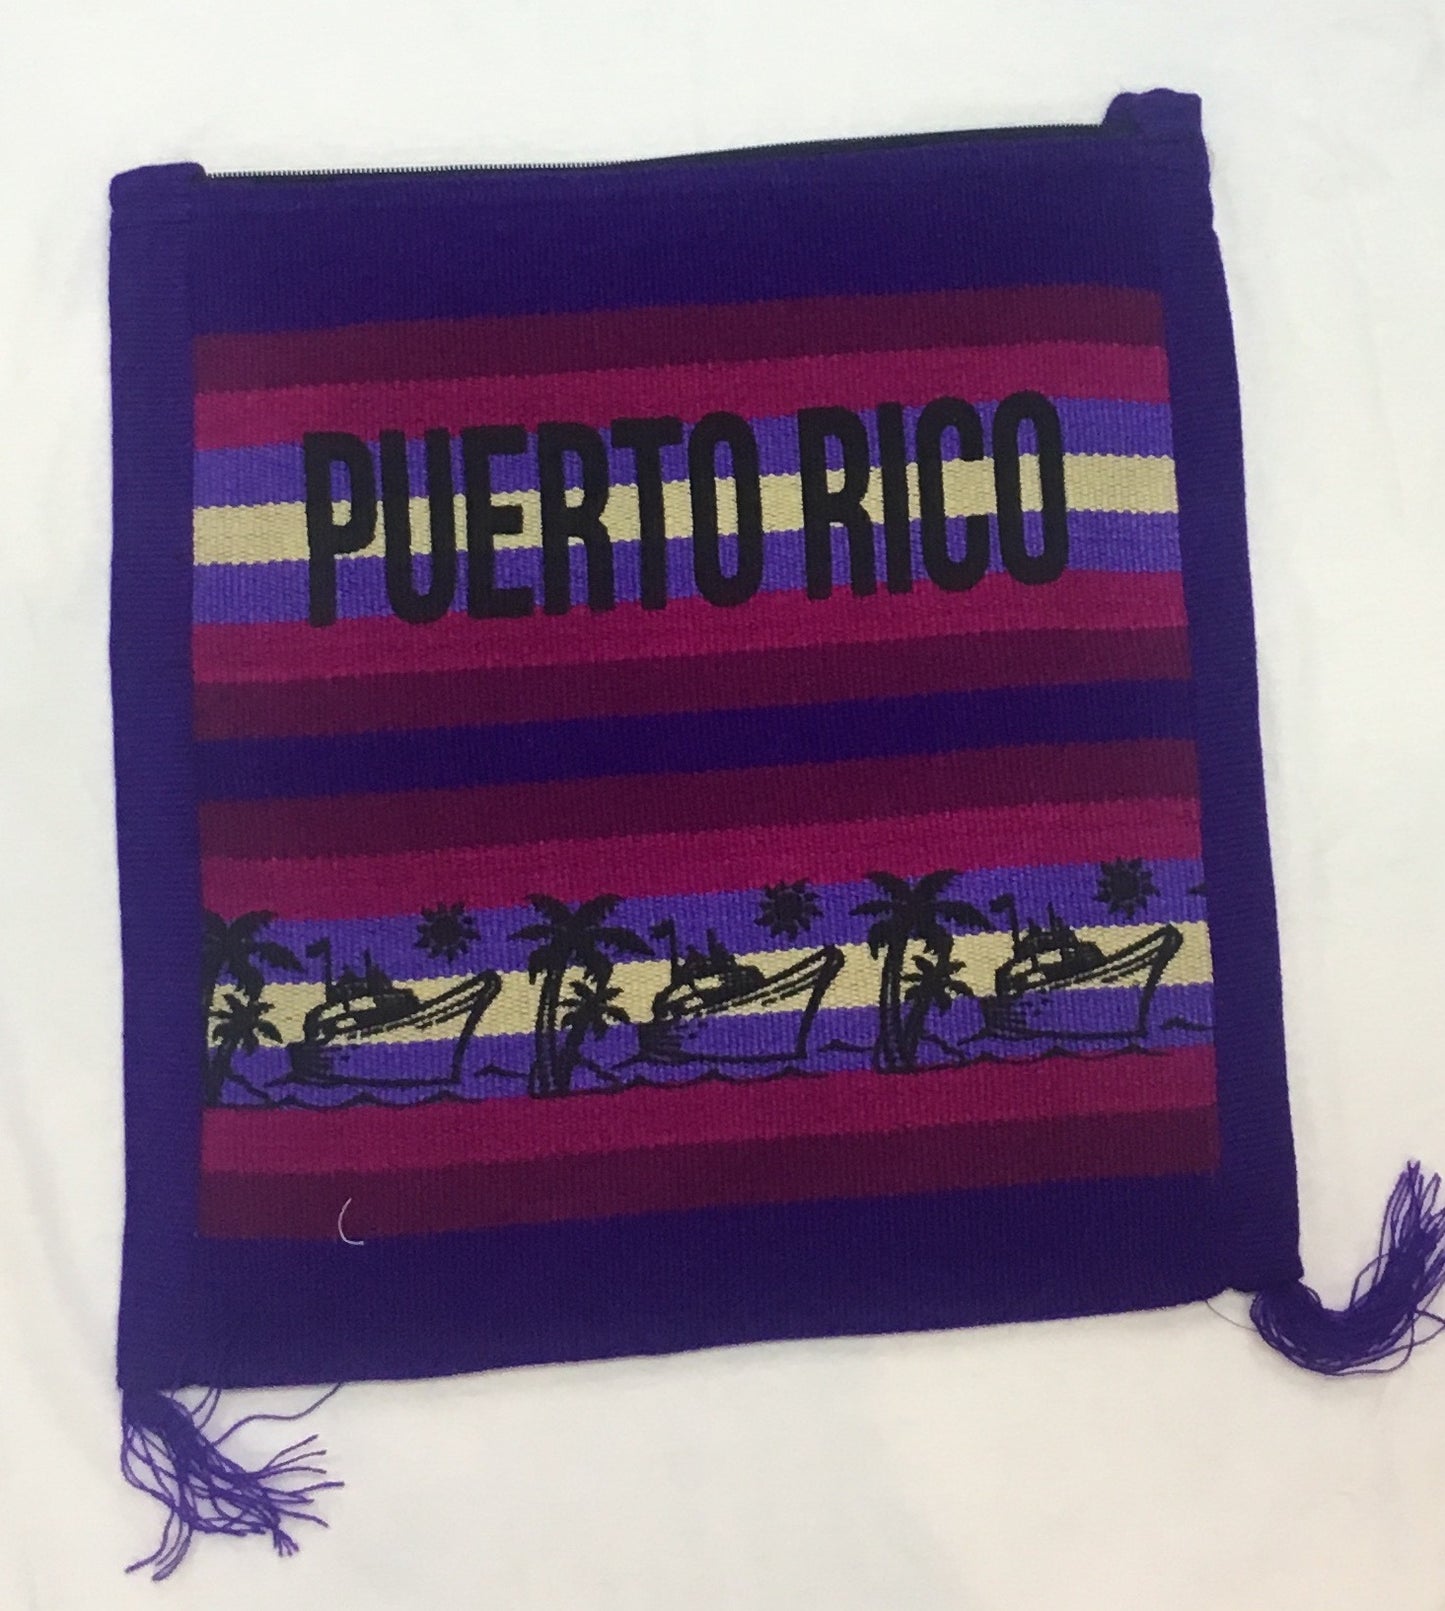 Messenger bags Puerto Rico